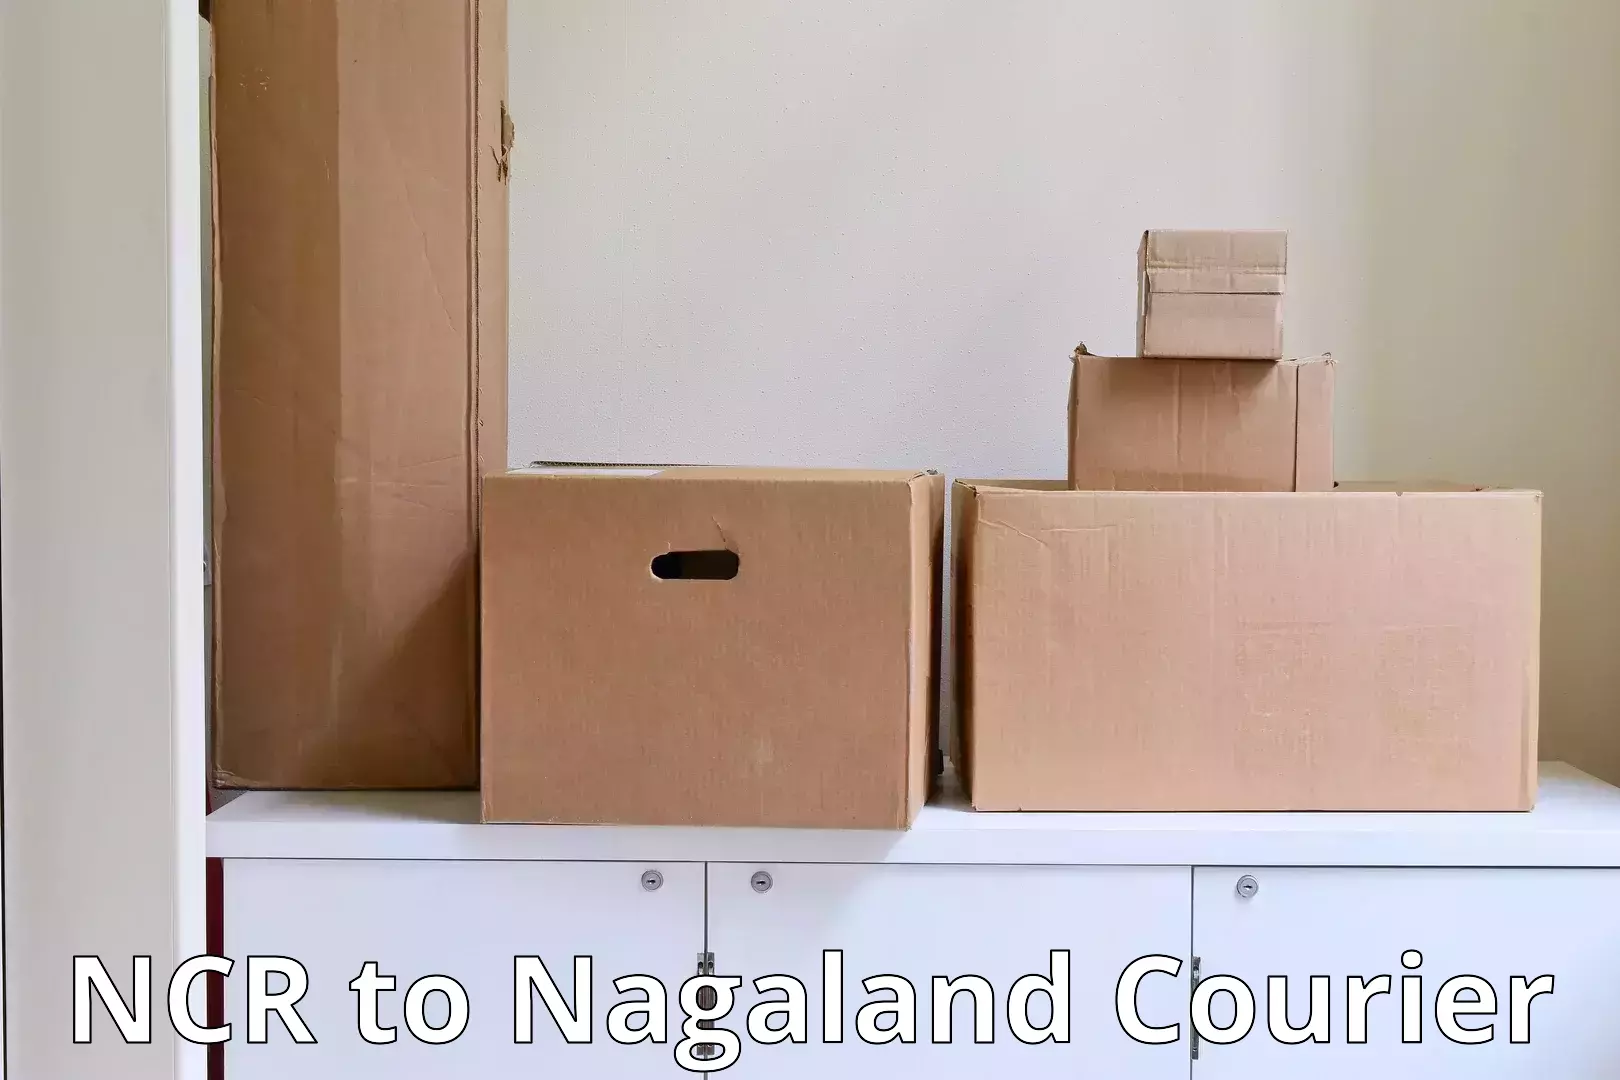 Professional moving company NCR to Nagaland